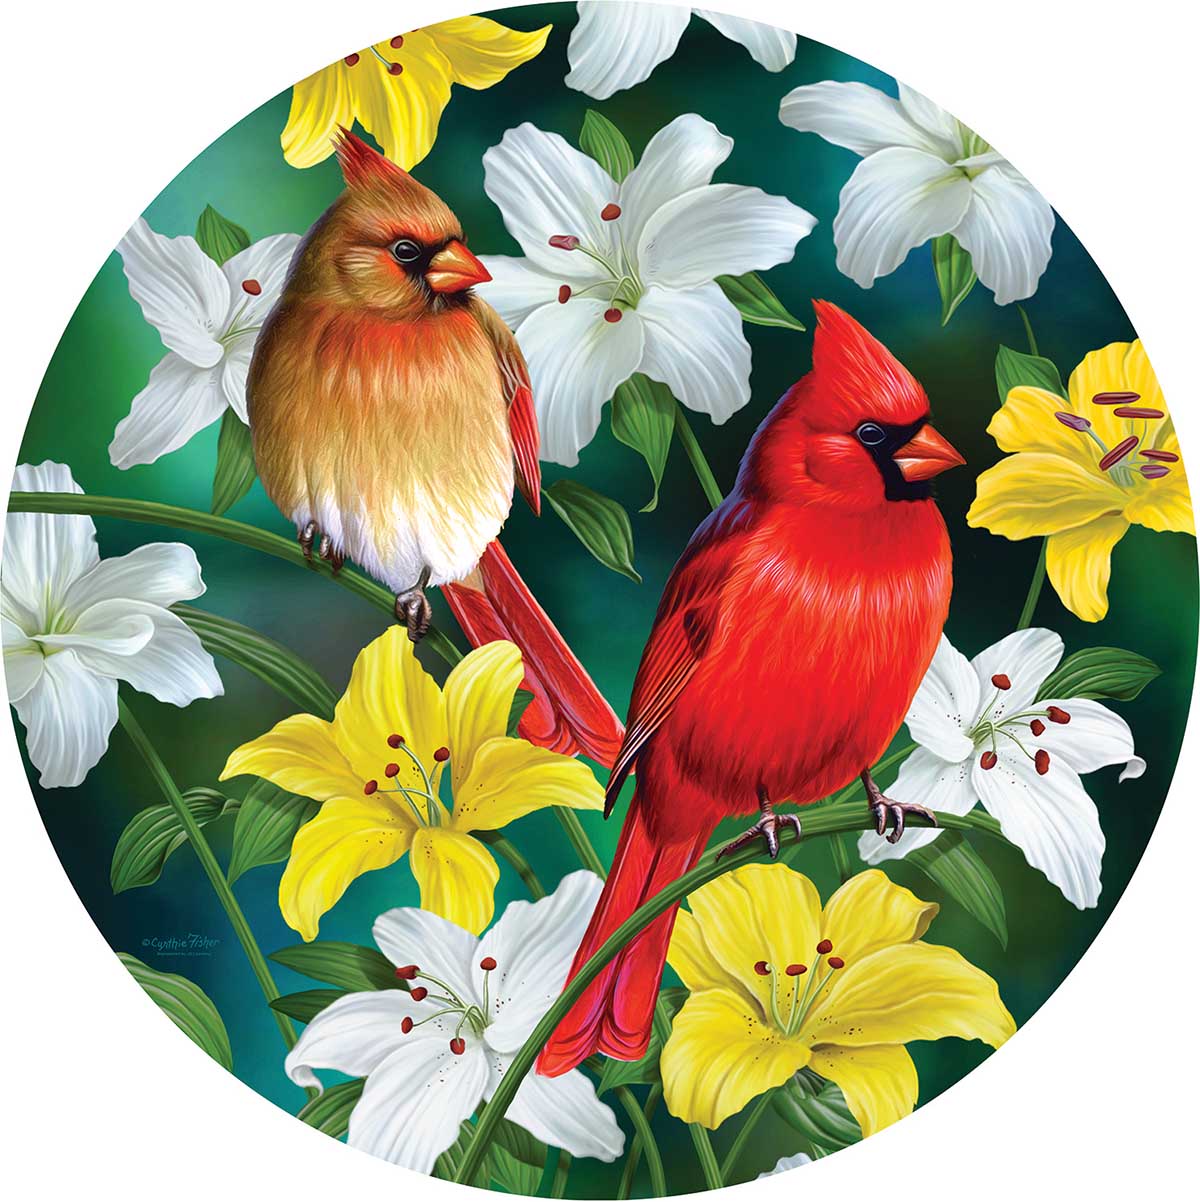 Cardinals in the Round Birds Round Jigsaw Puzzle